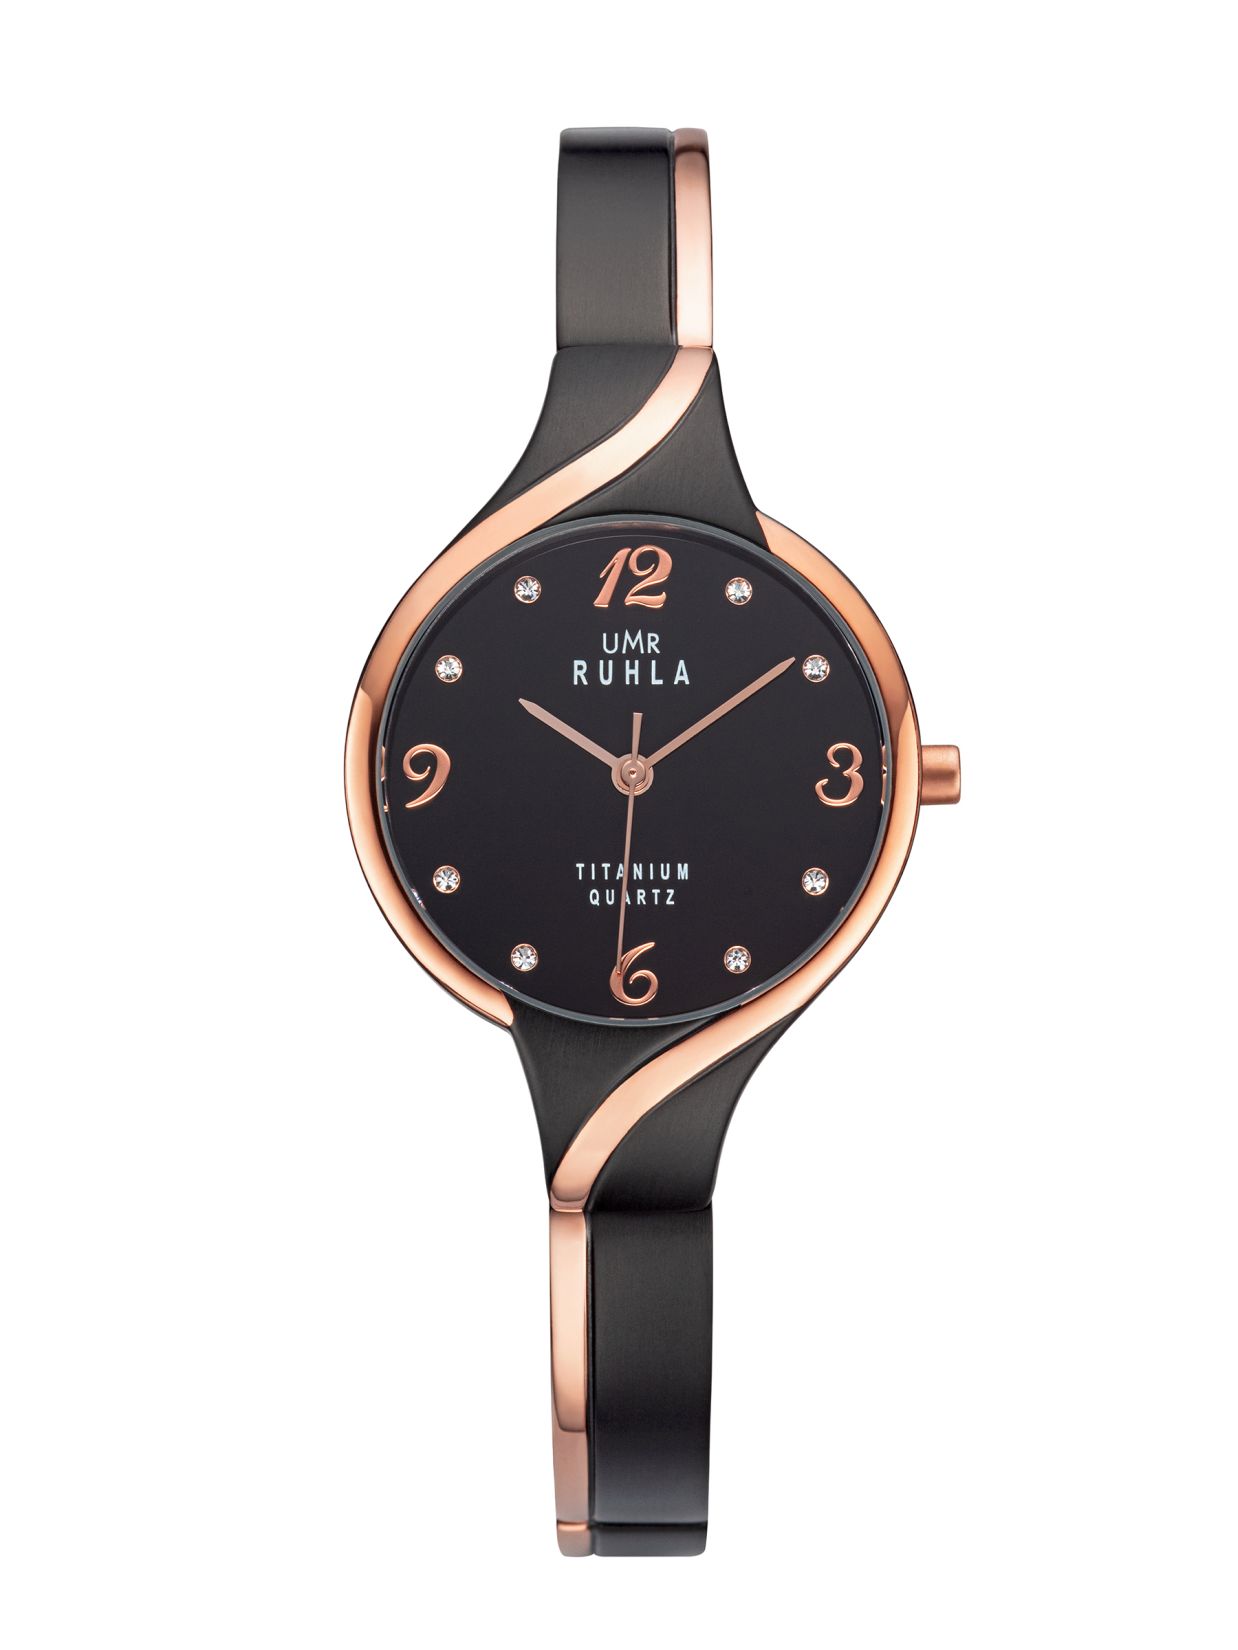 Uhren Manufaktur Ruhla - Armbanduhr Style bicolor Schwarz-rosé